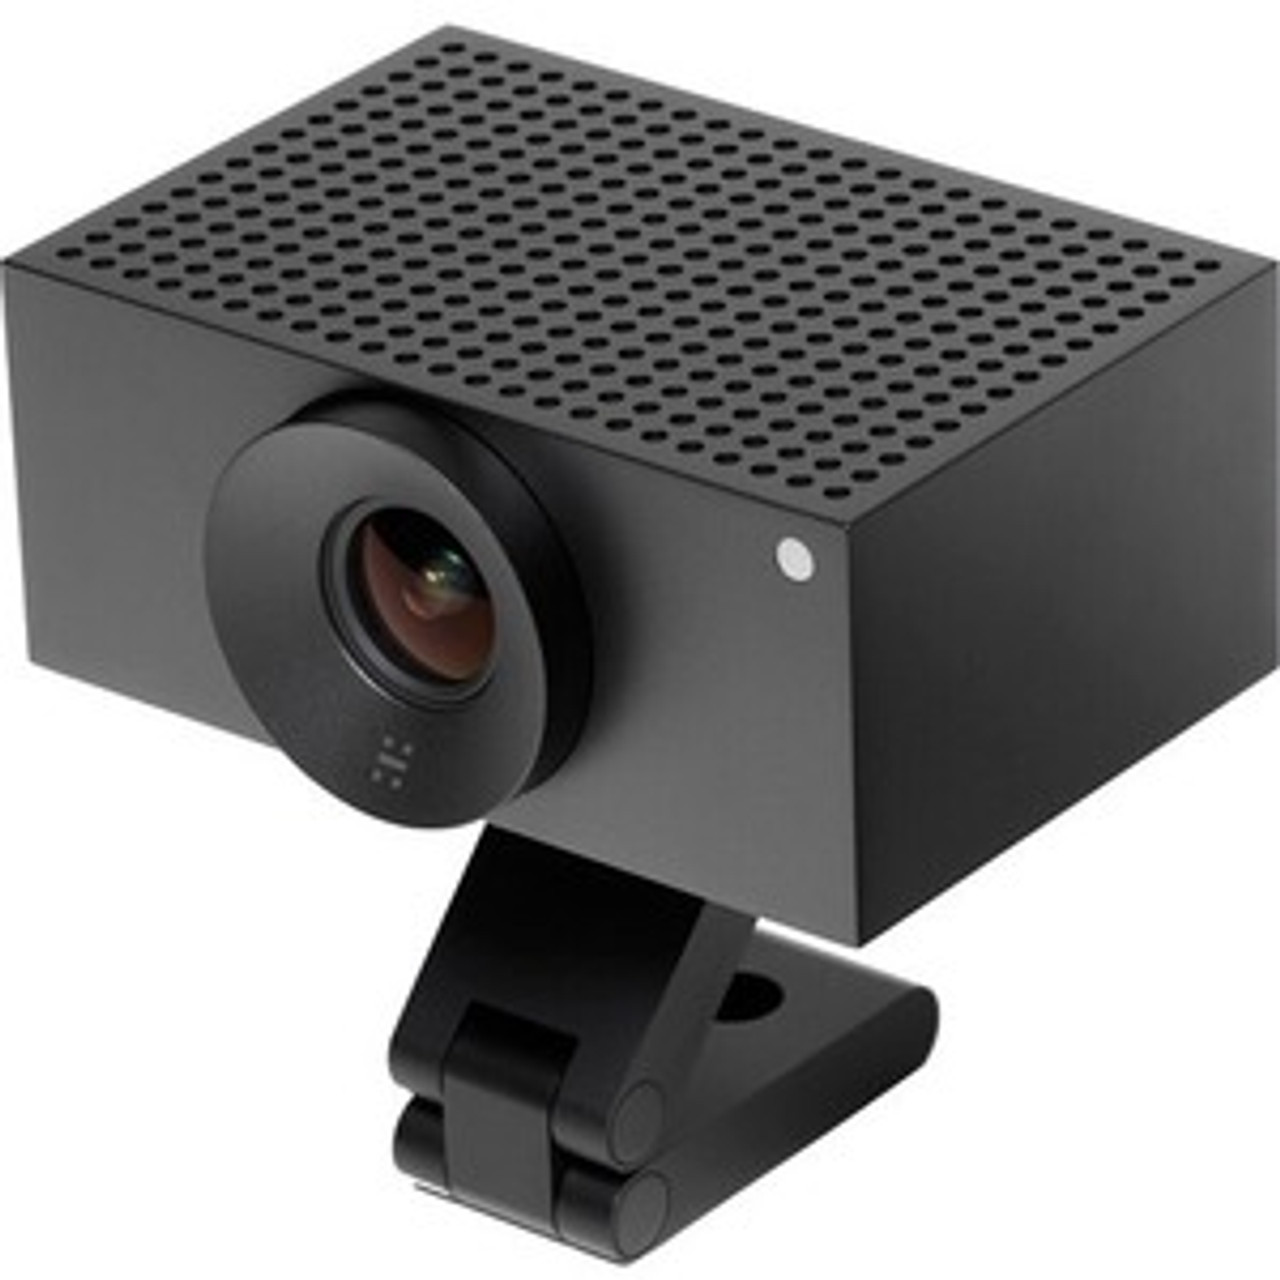 Crestron Flex UC-M70-Z Video Conference Equipment -  65115